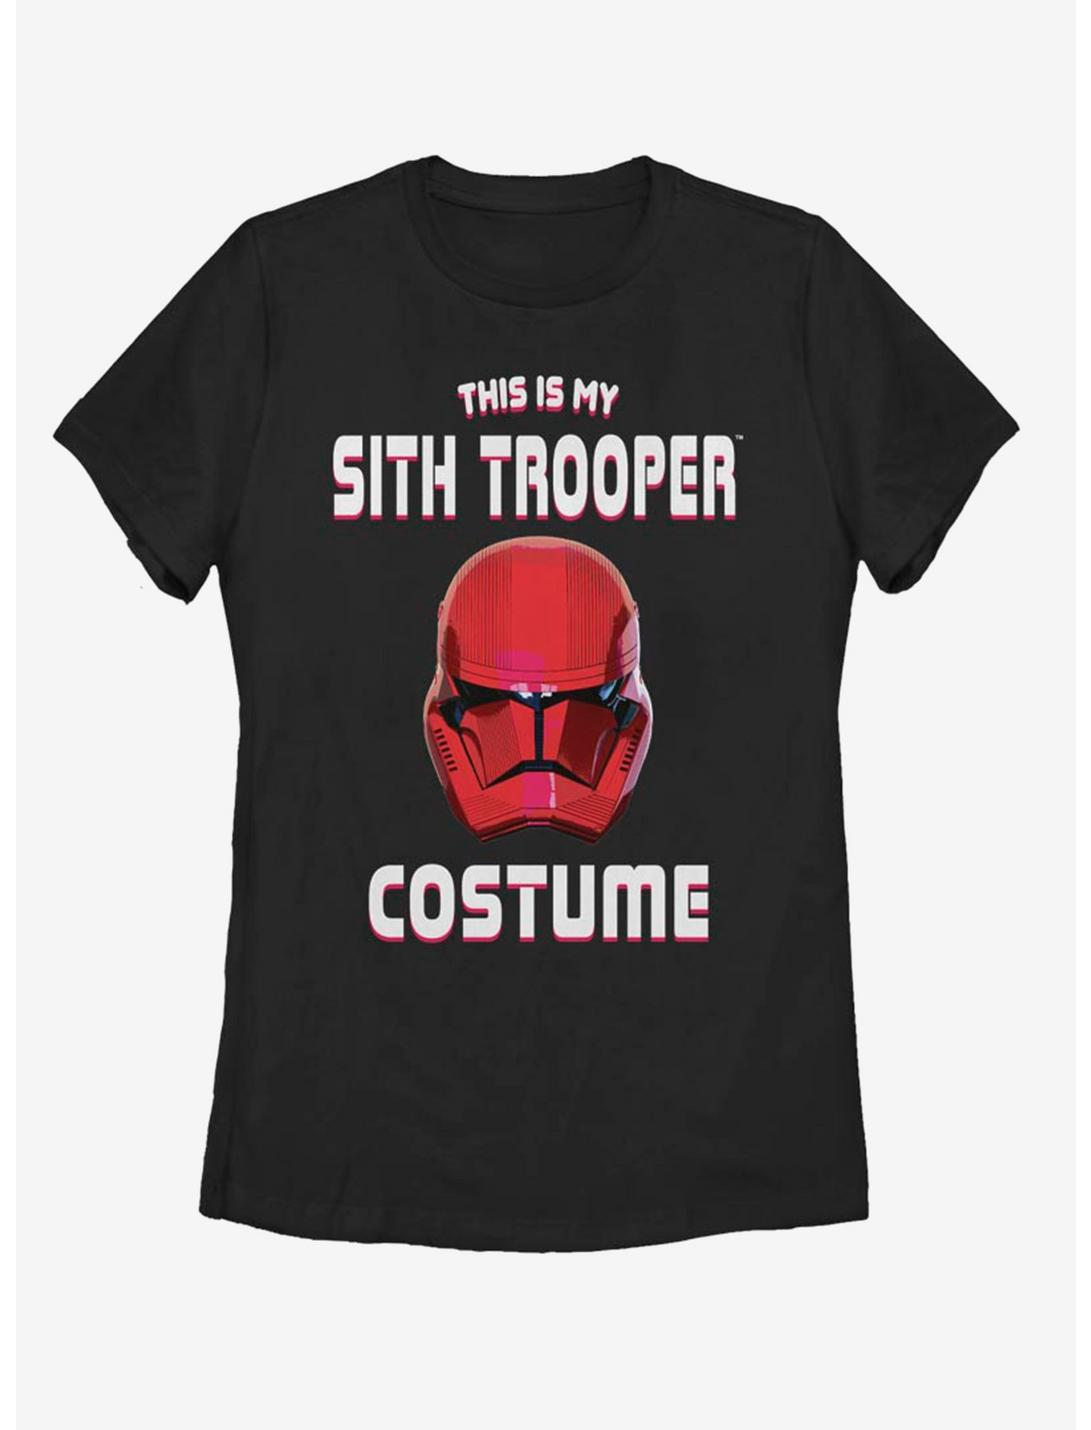 Star Wars Episode IX The Rise Of Skywalker Sith Trooper Costume Womens T-Shirt, BLACK, hi-res